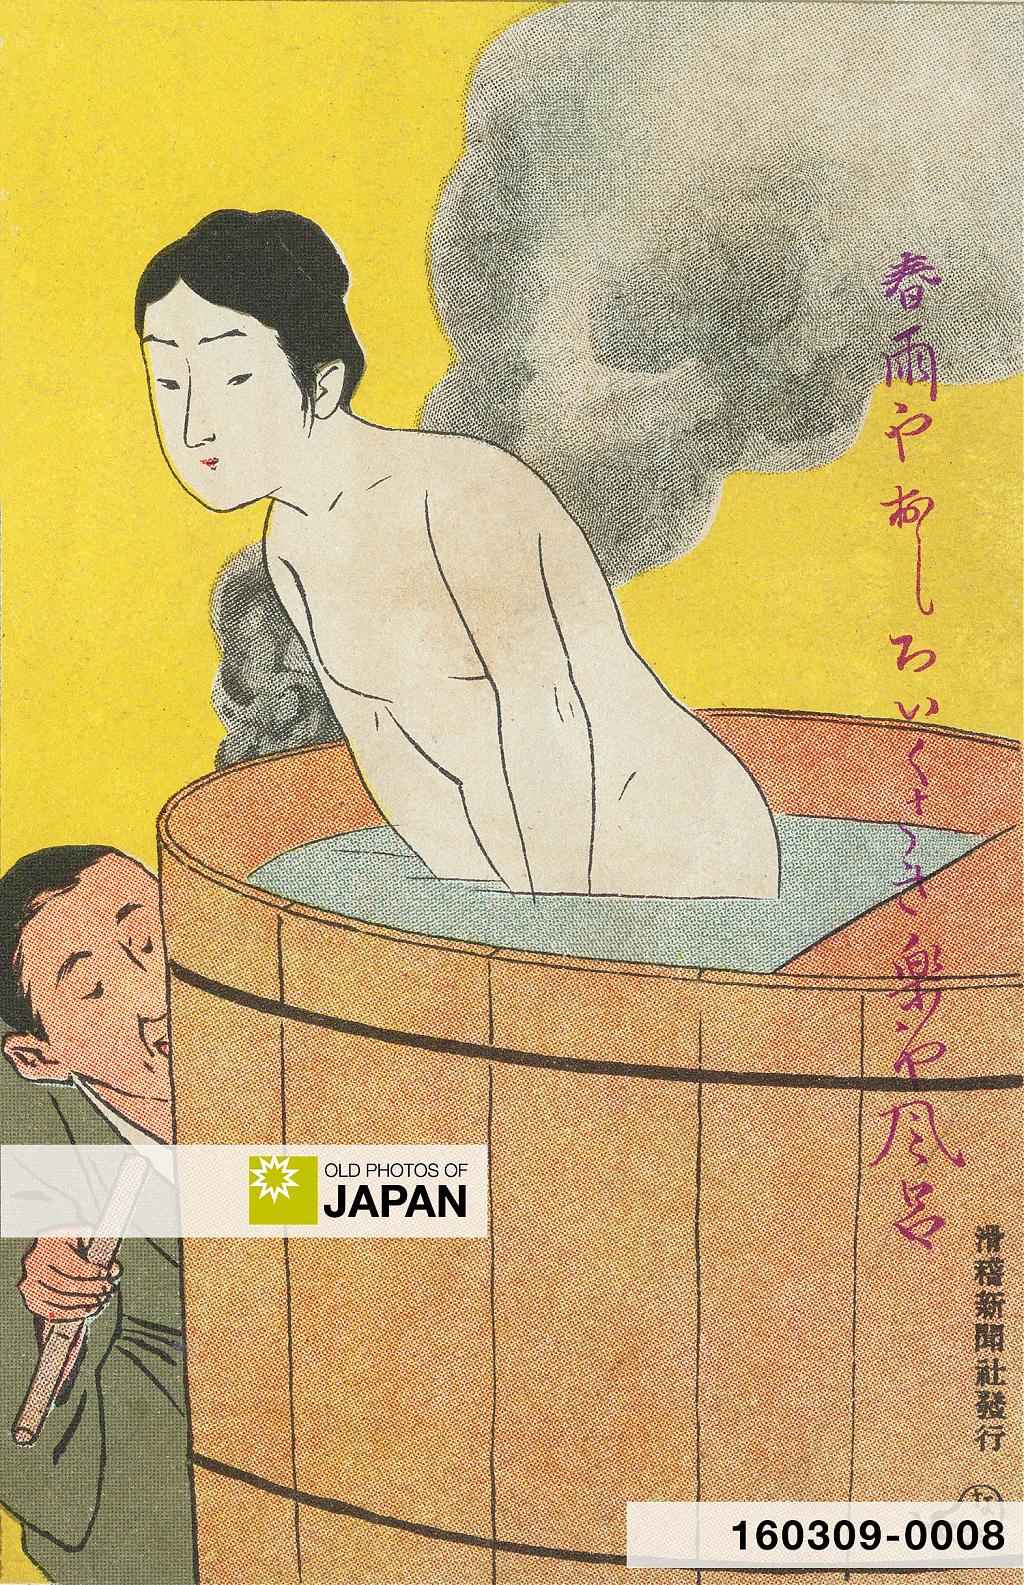 160309-0008 - Art of a Bathing Japanese Woman, 1908